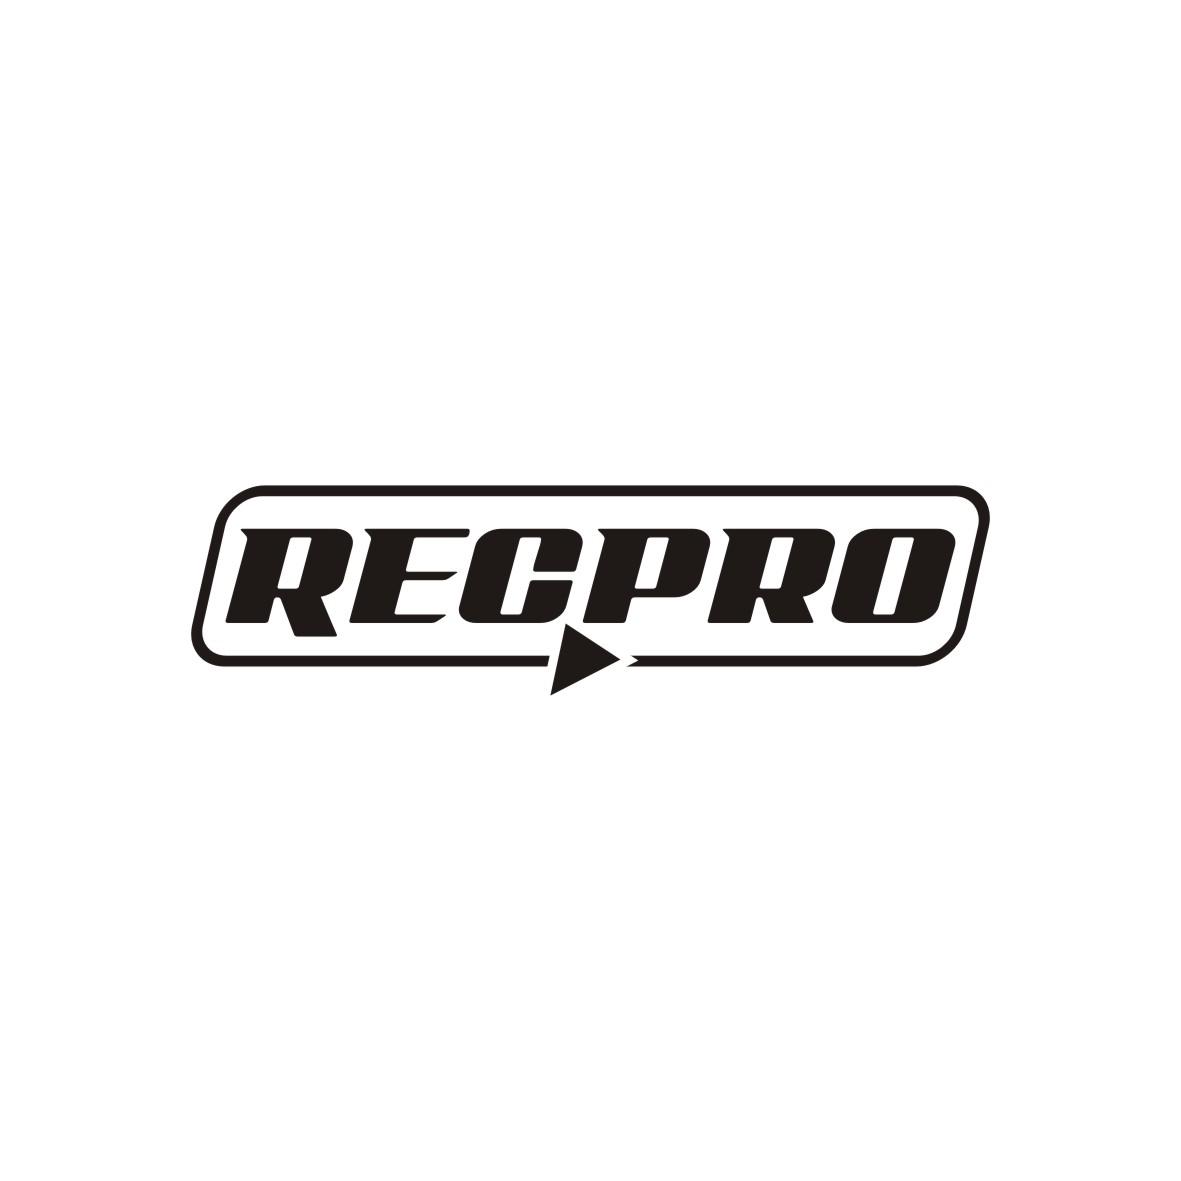 RECPRO录音机商标转让费用买卖交易流程